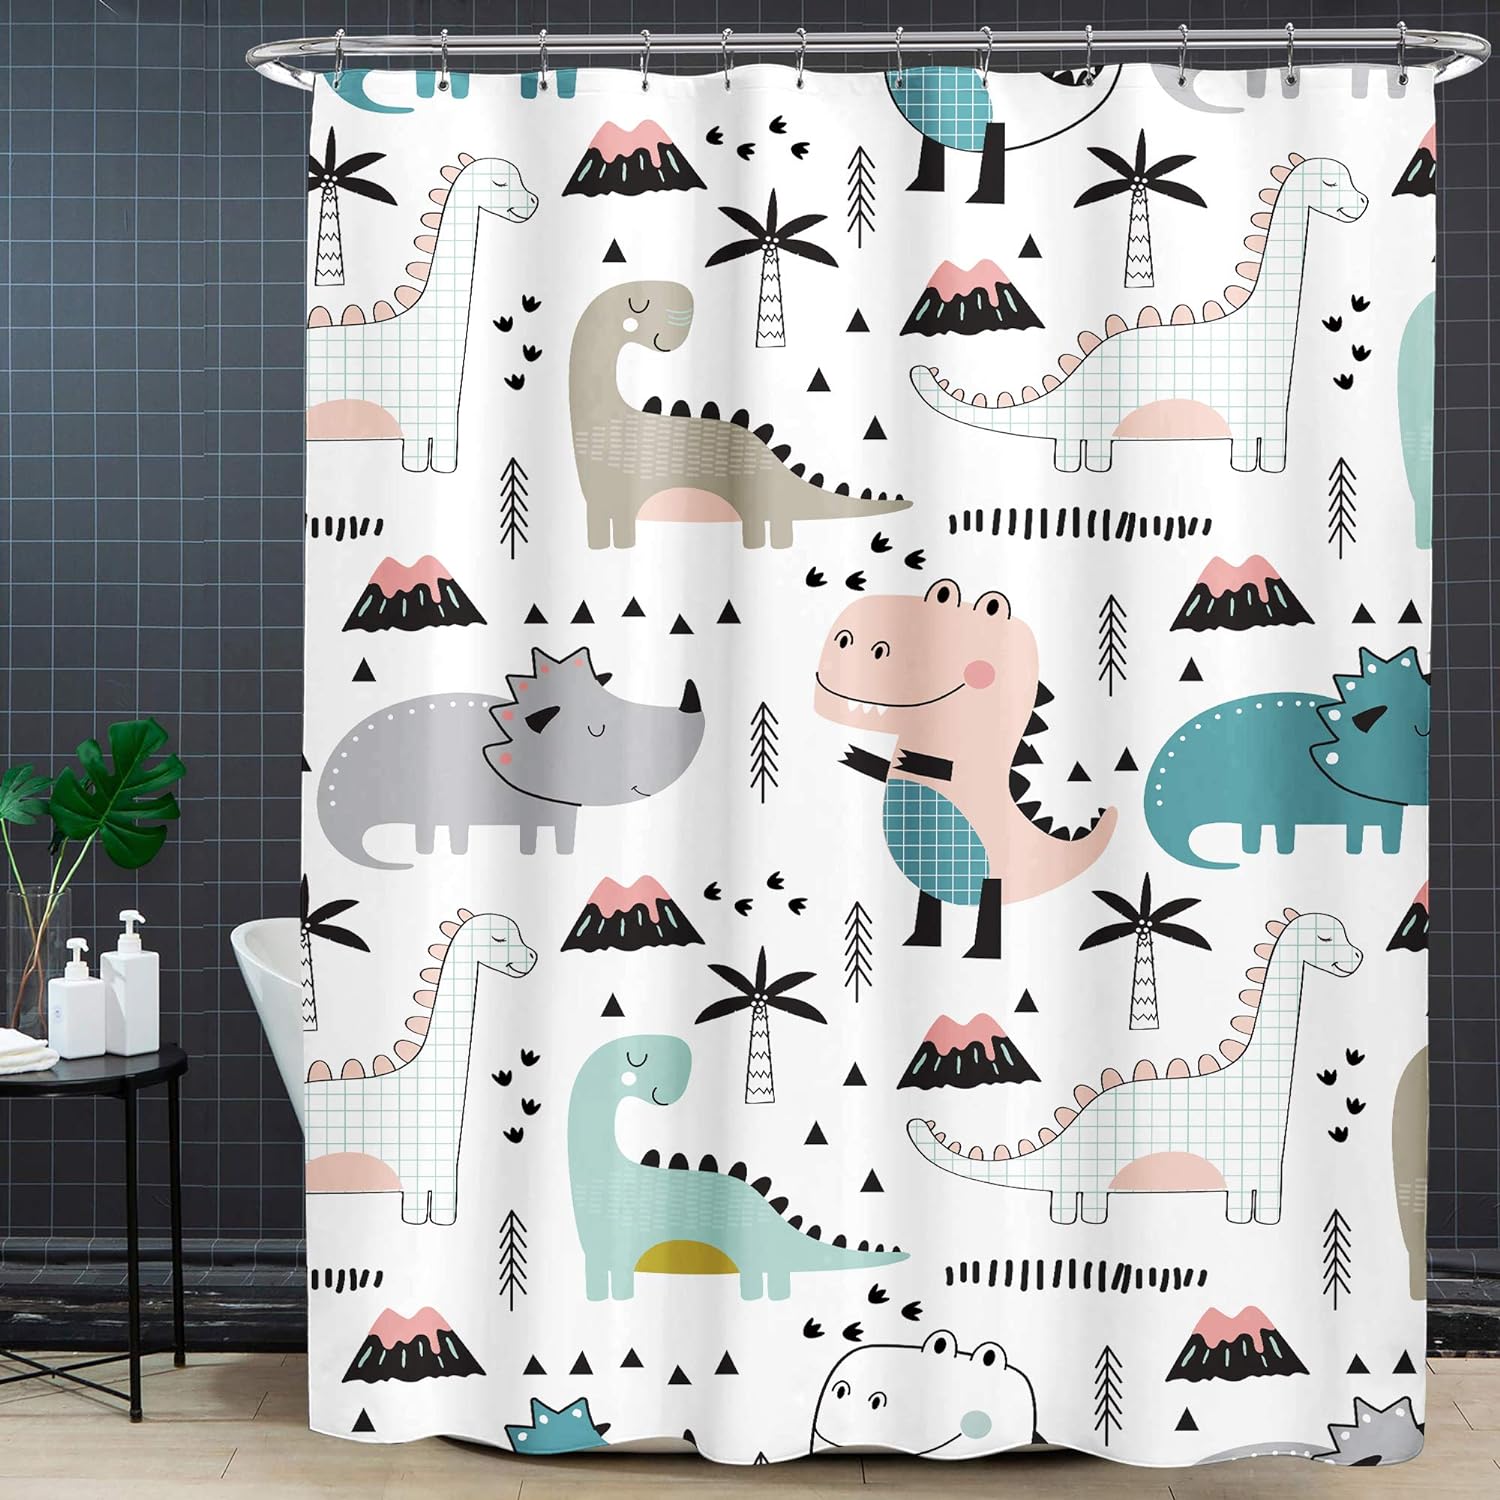 Komllex Cartoon Dinosaur Shower Curtain, Dino Shower Curtain